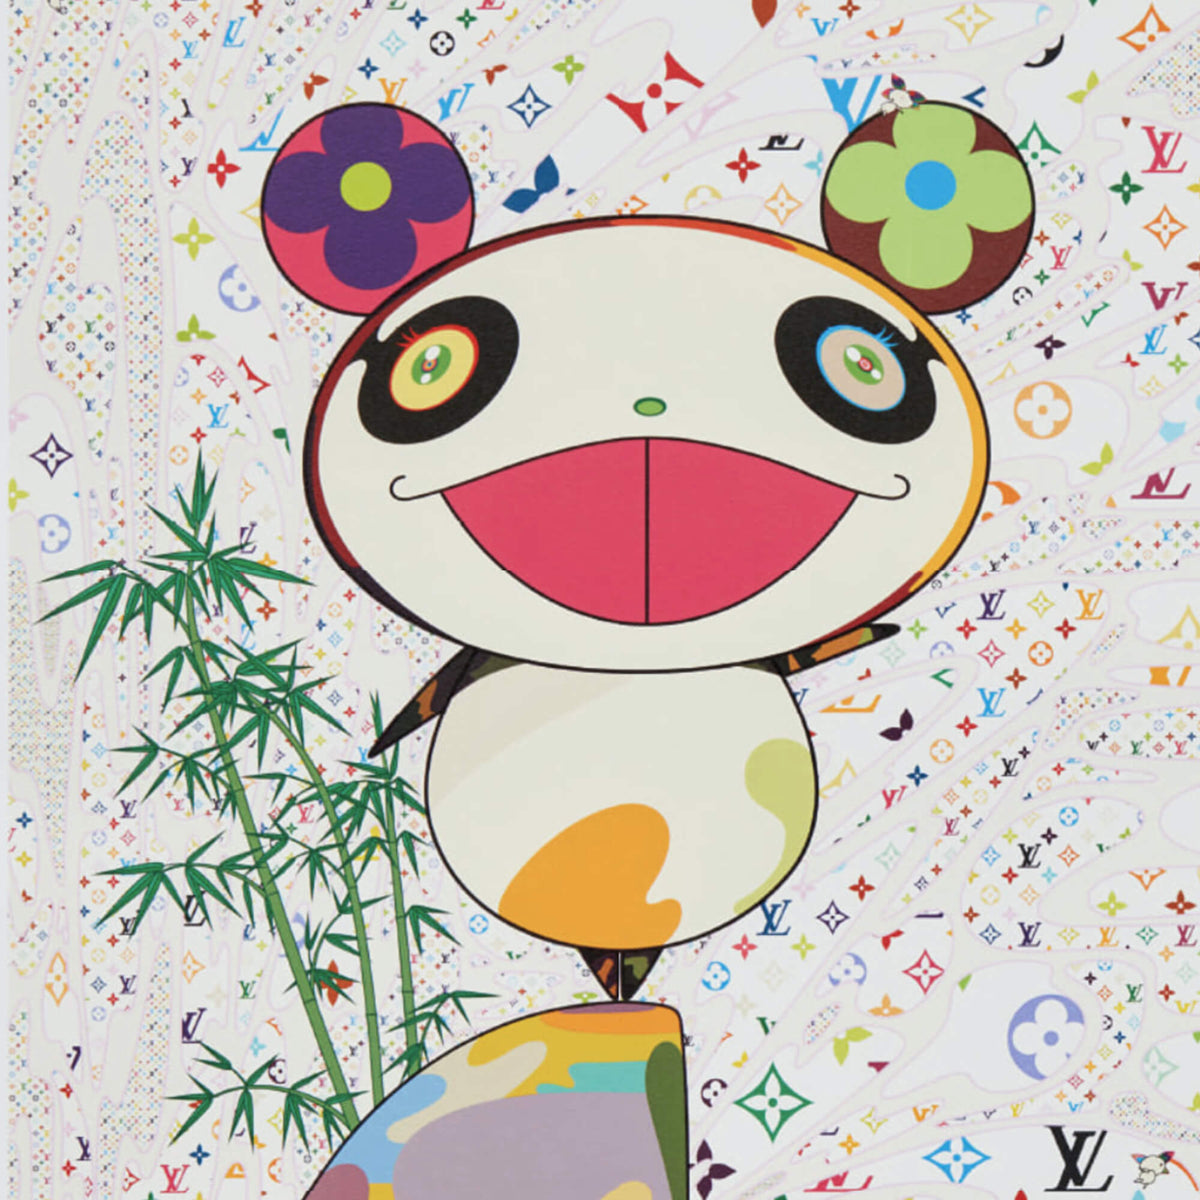 Authentic Limited Edition Louis Vuitton Takashi Murakami Panda